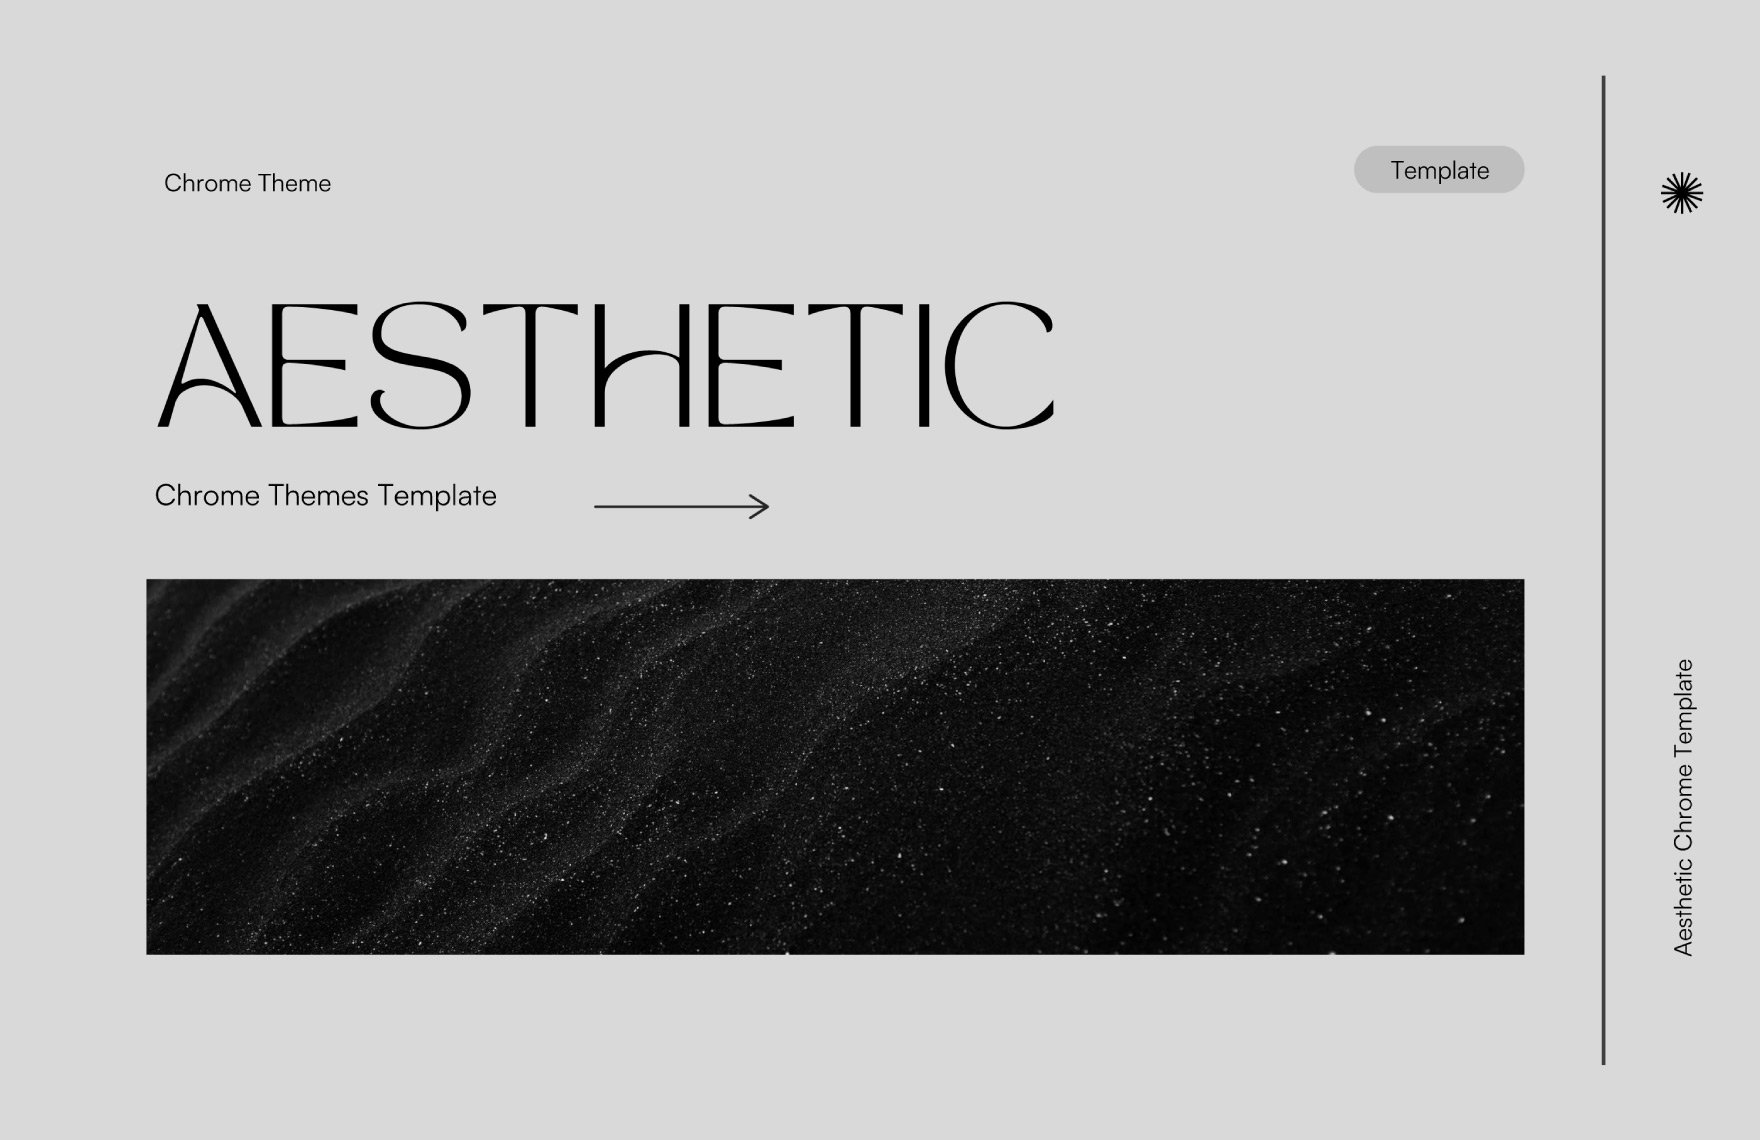 Aesthetic Chrome Themes Template